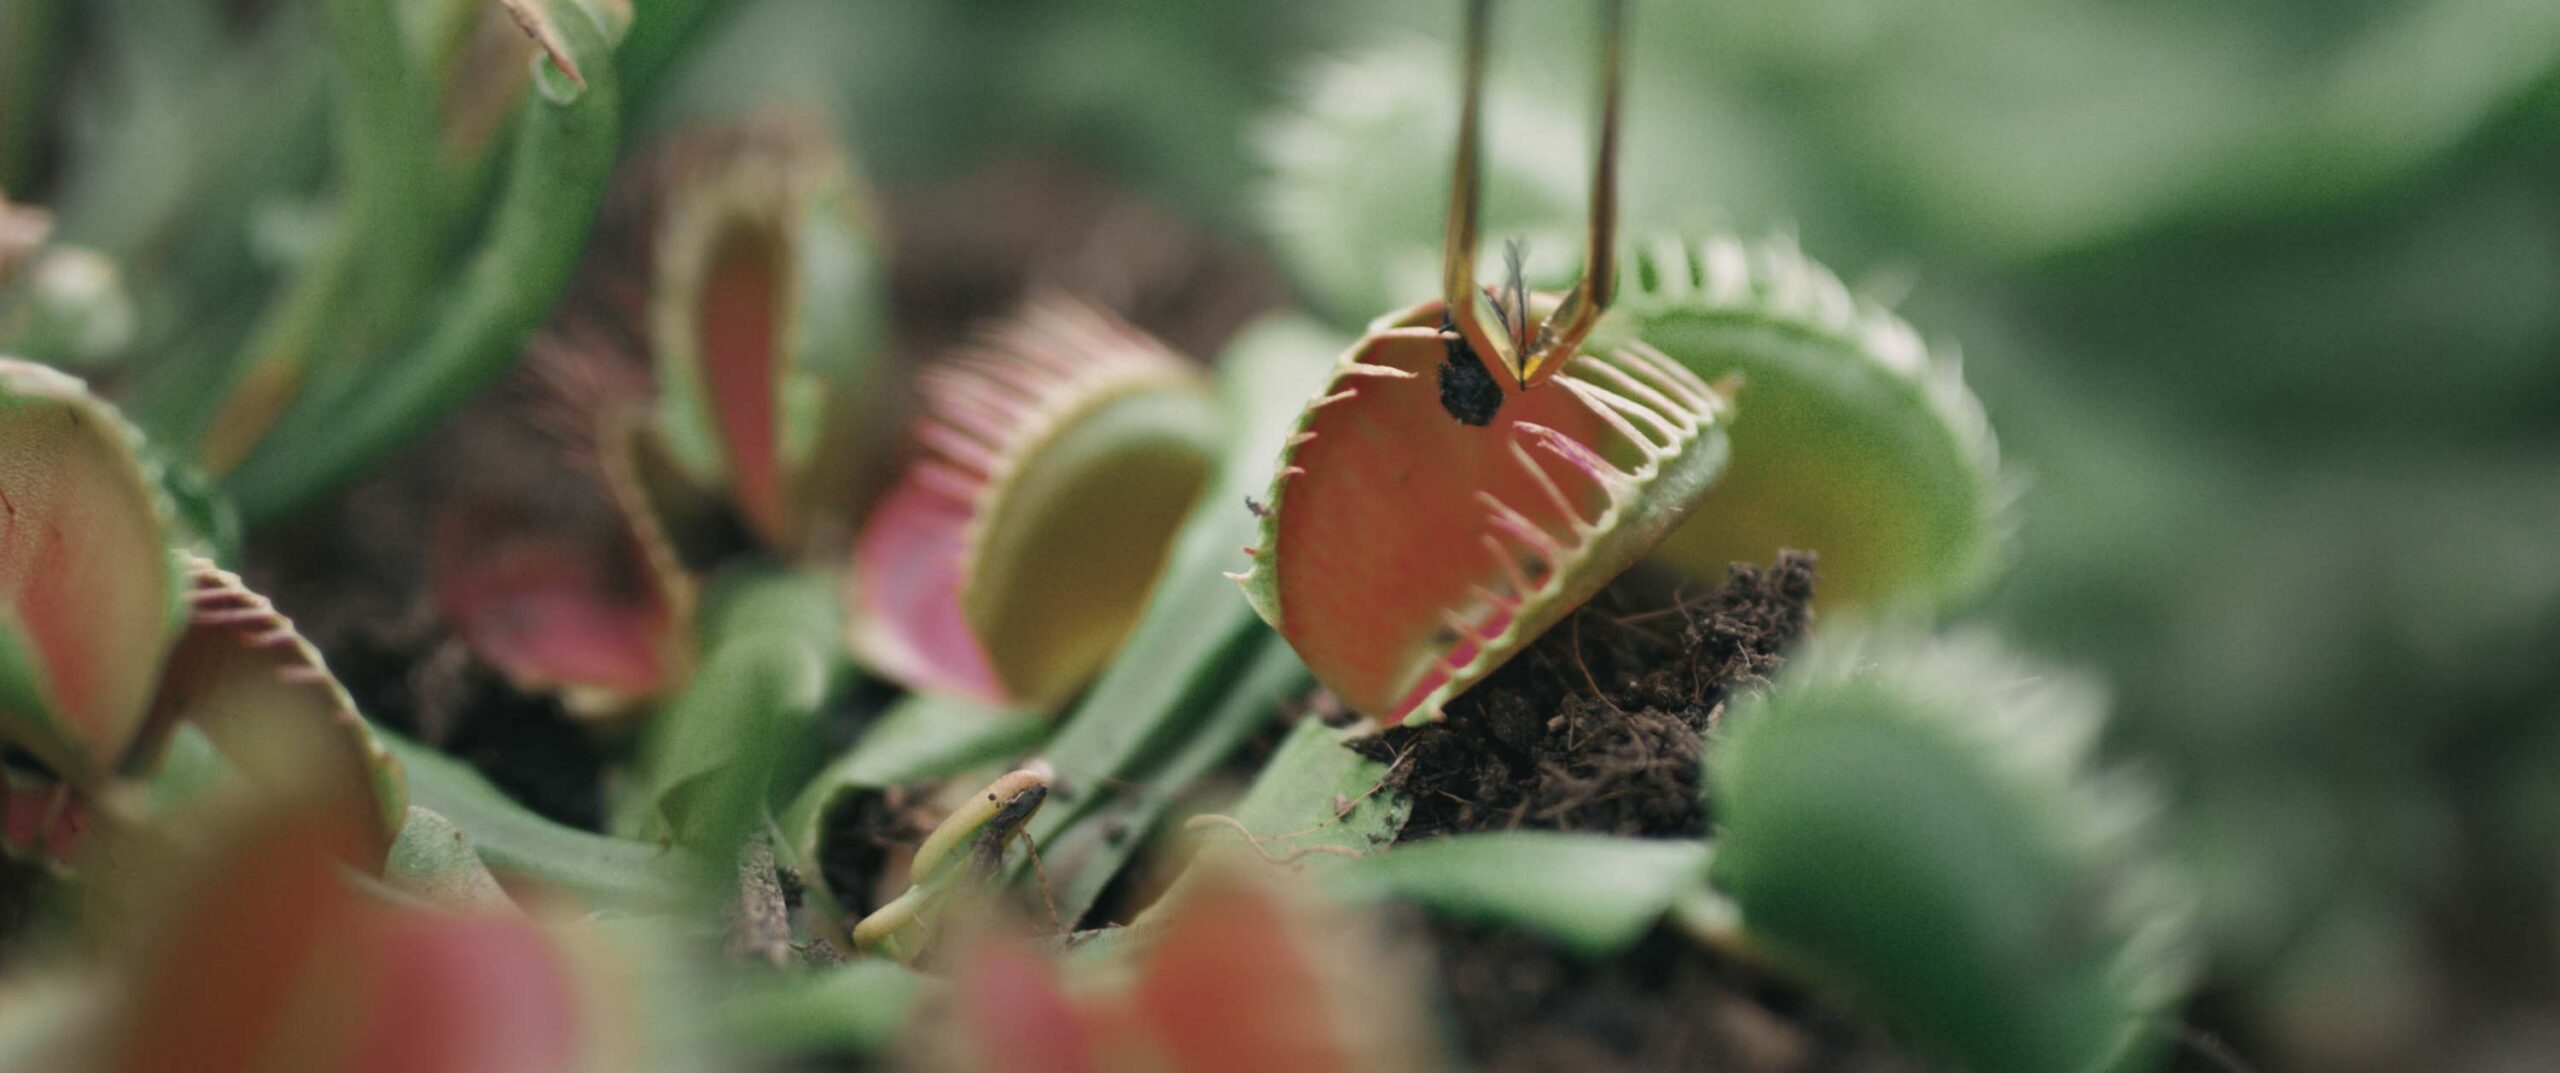 Garden Plot | carnivorous plant being fed